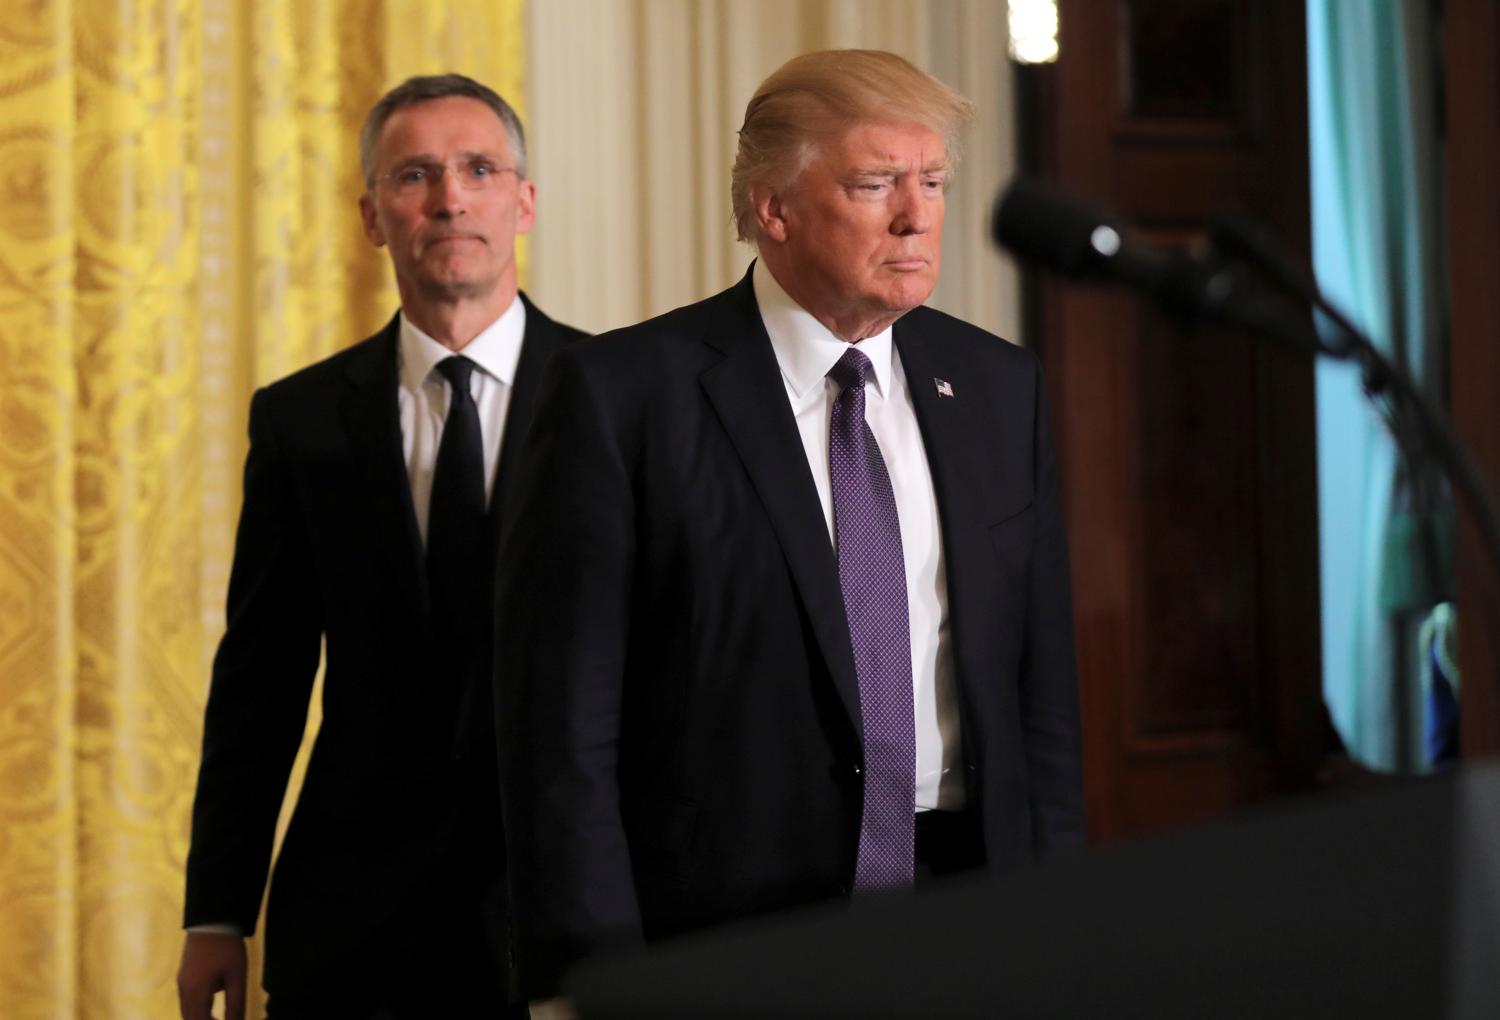 U.S. President Donald Trump (R) and NATO Secretary General Jens Stoltenberg